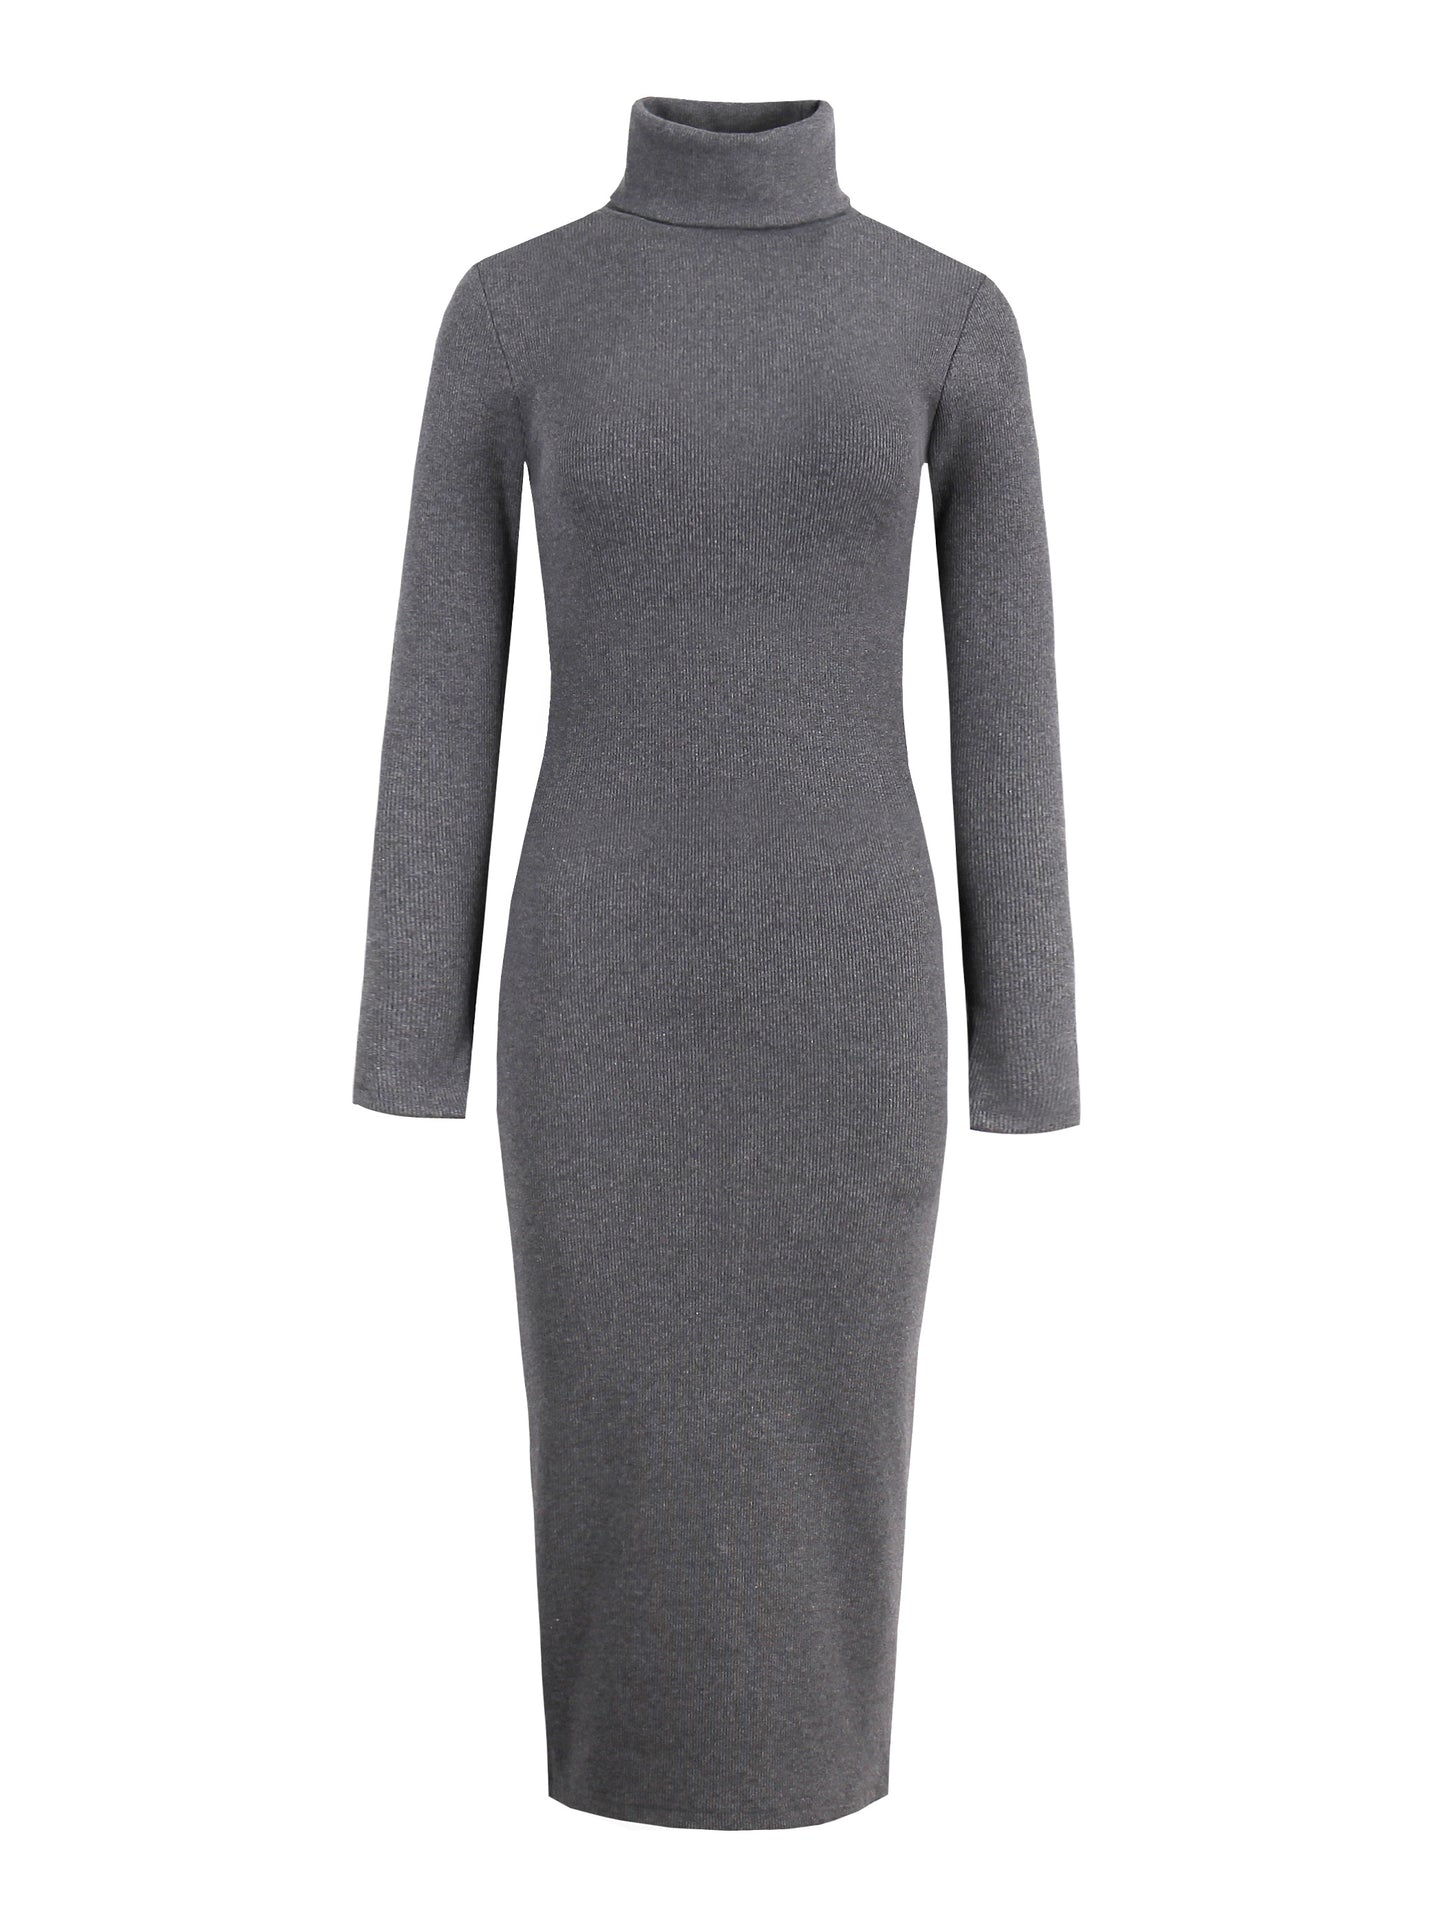 Mid-Calf Turtleneck Long Sleeve Pullover Women's Dress